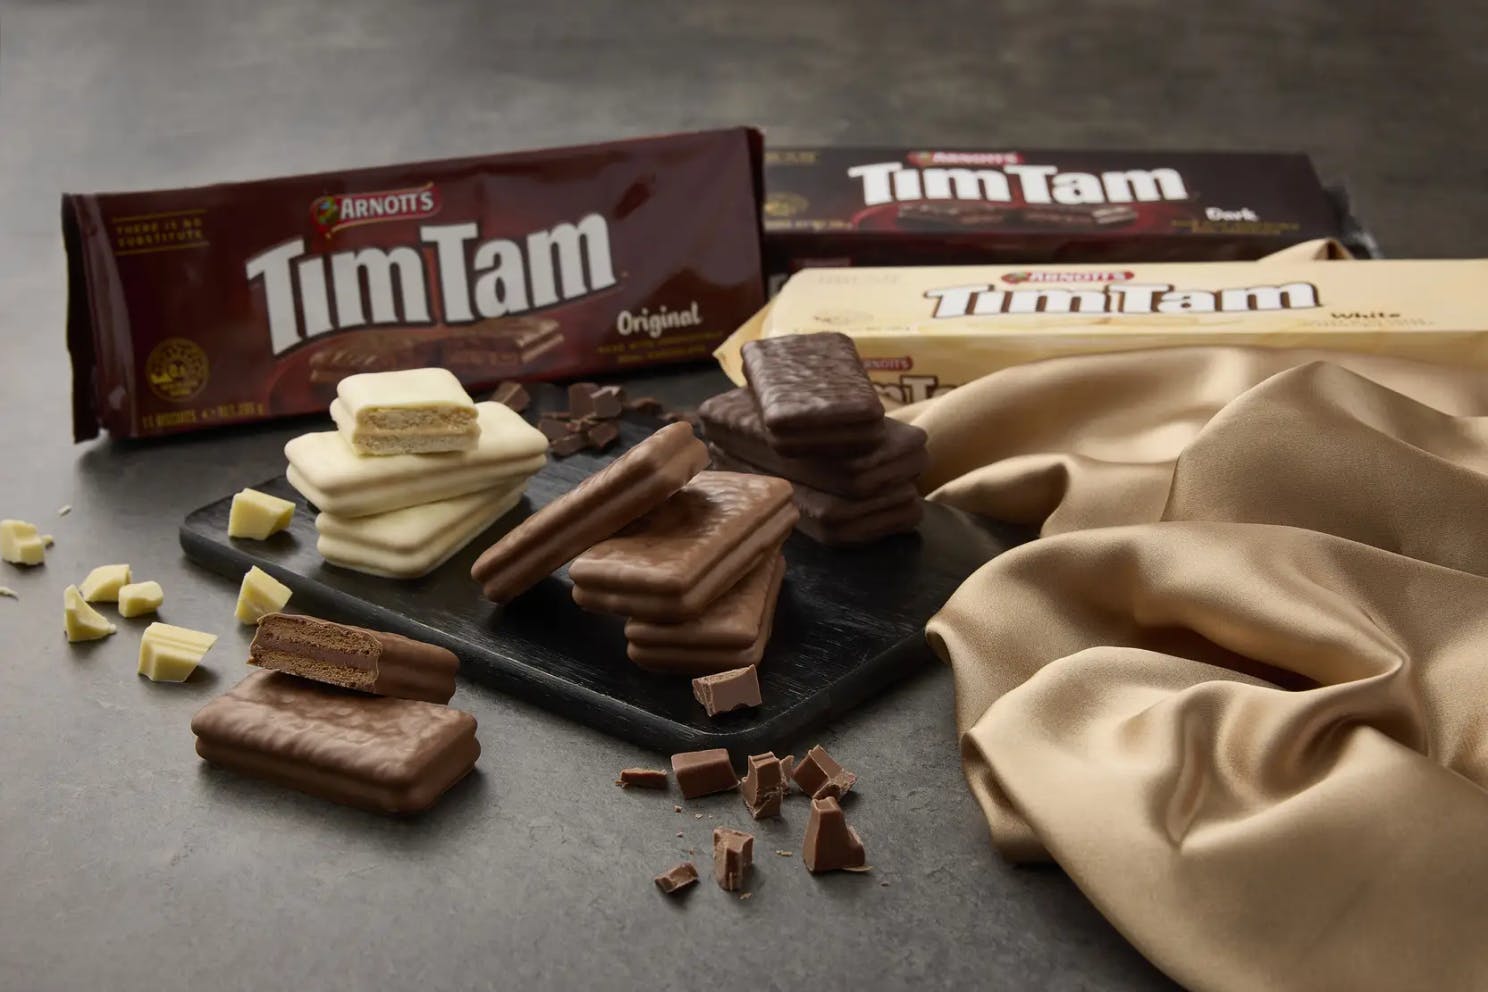 White chocolate, milk chocolate and dark chocolate Tim Tams